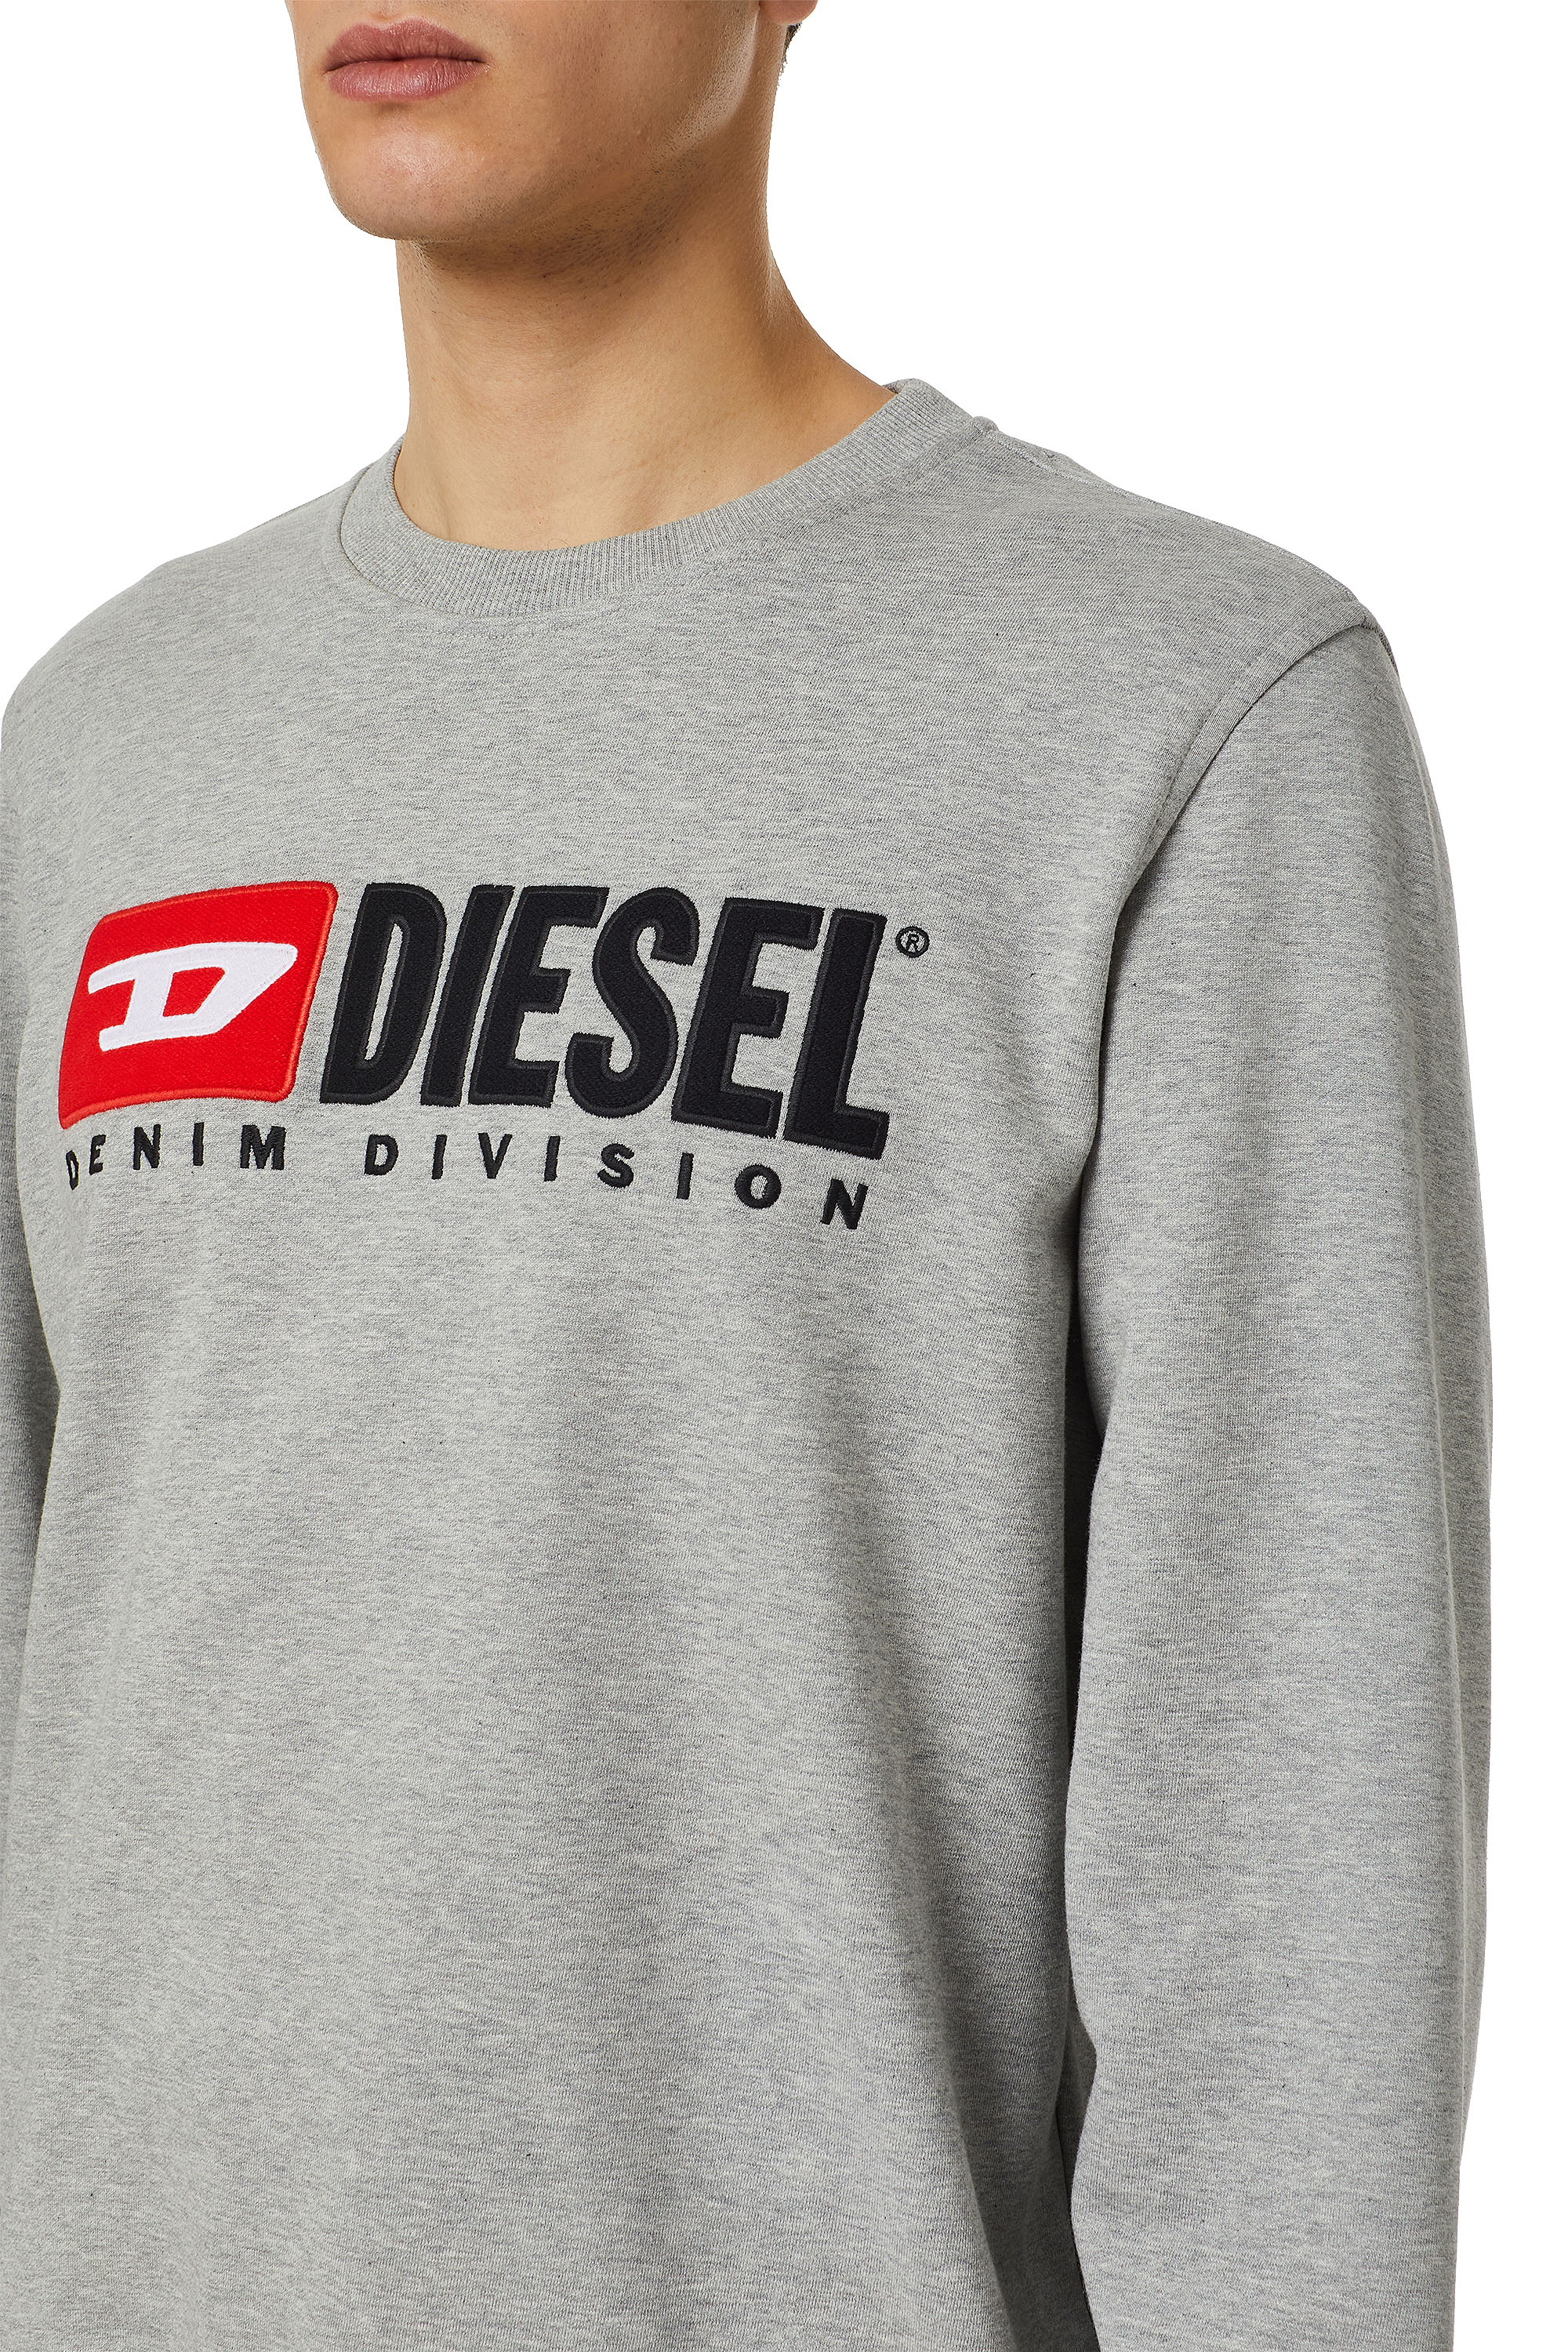 Diesel - S-GINN-DIV, グレー - Image 5